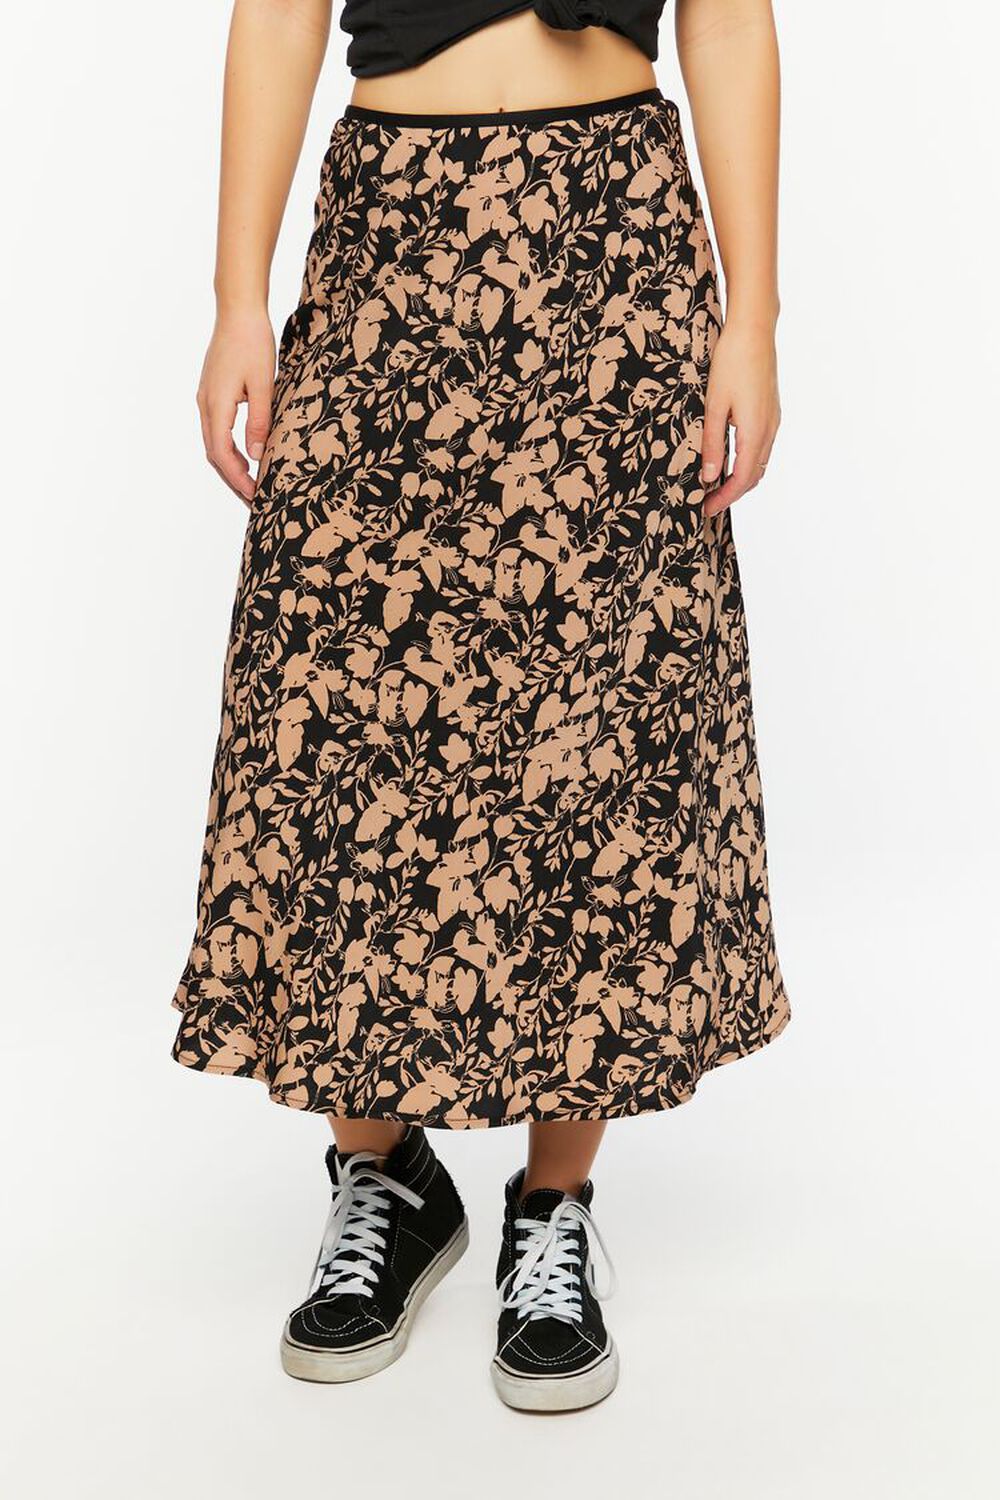 BLACK/BEIGE Floral Print A-Line Midi Skirt, image 2